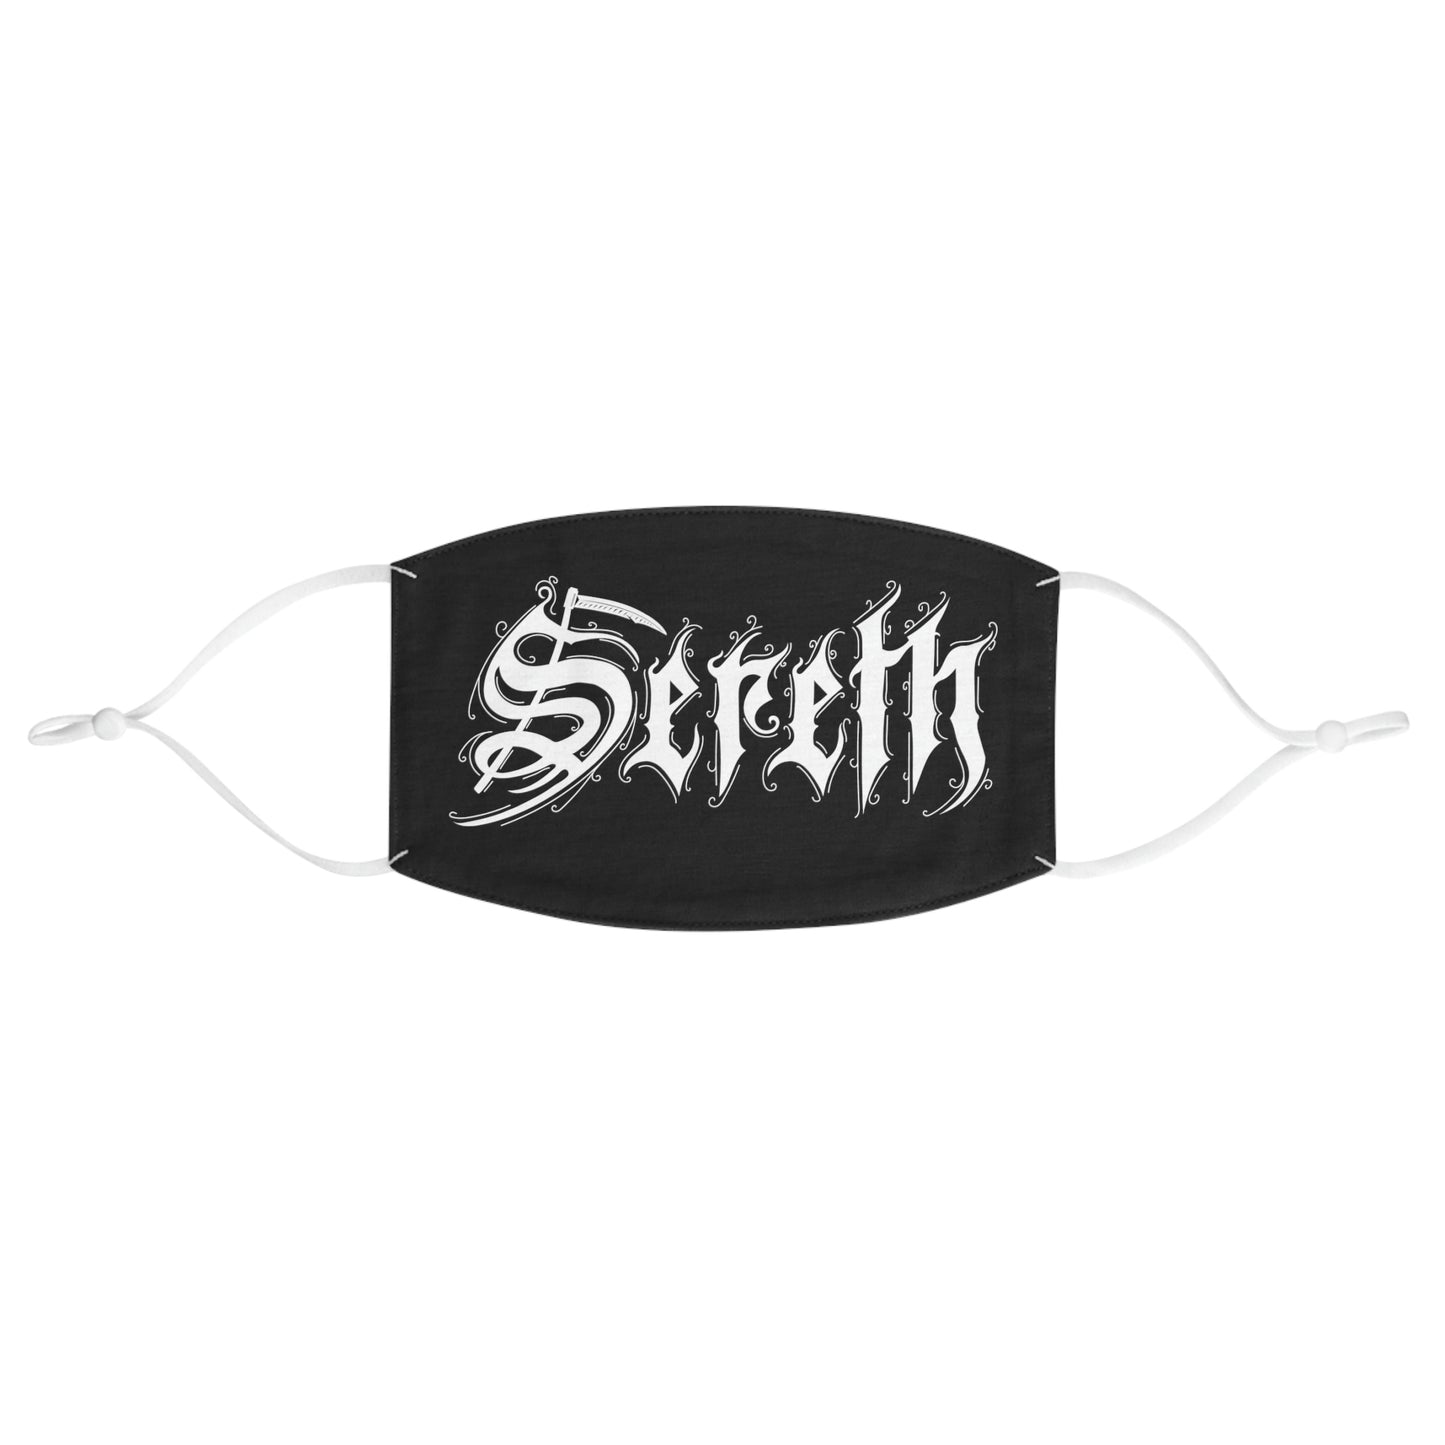 Sereth - (Black) Face Mask (UK)